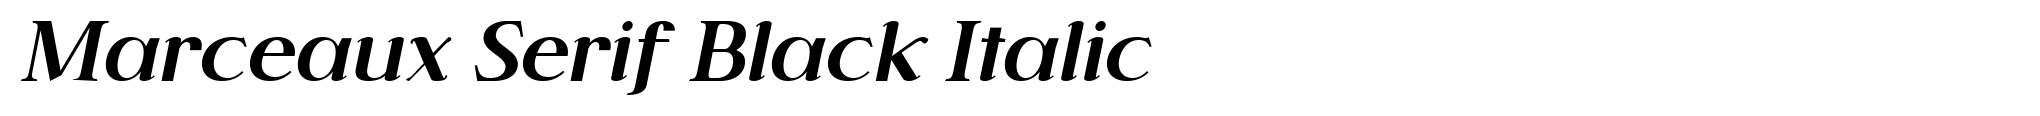 Marceaux Serif Black Italic image